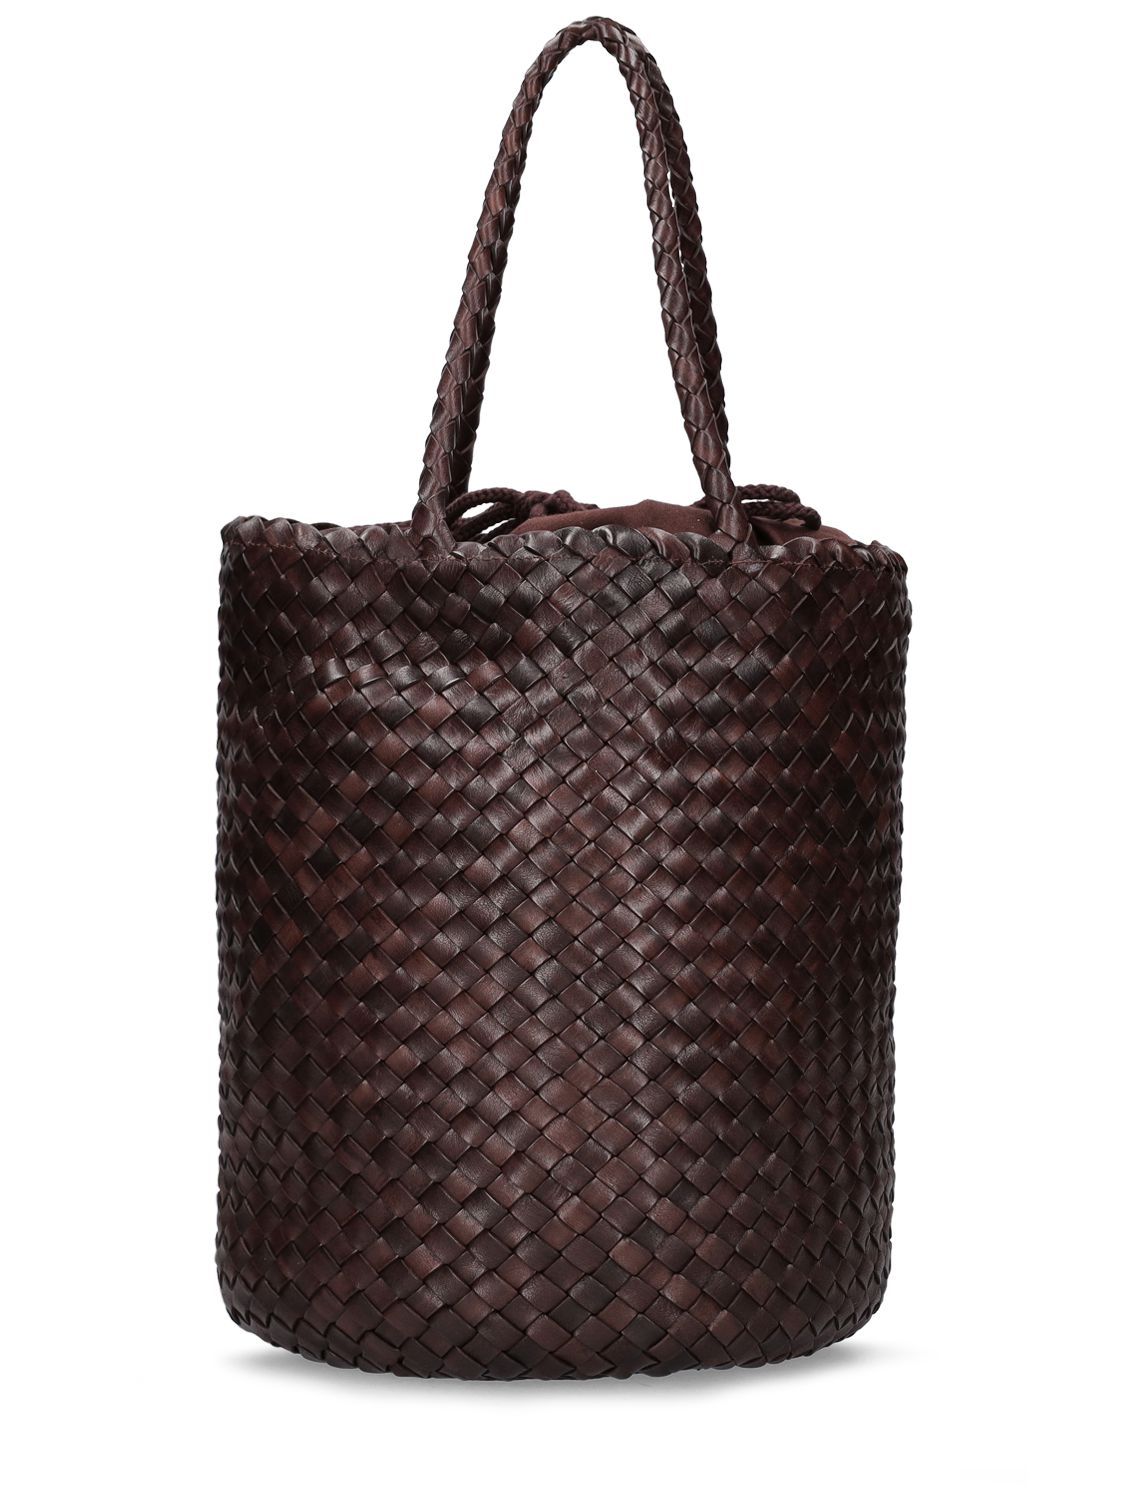 Hand Braided Leather Straps Basket Bag